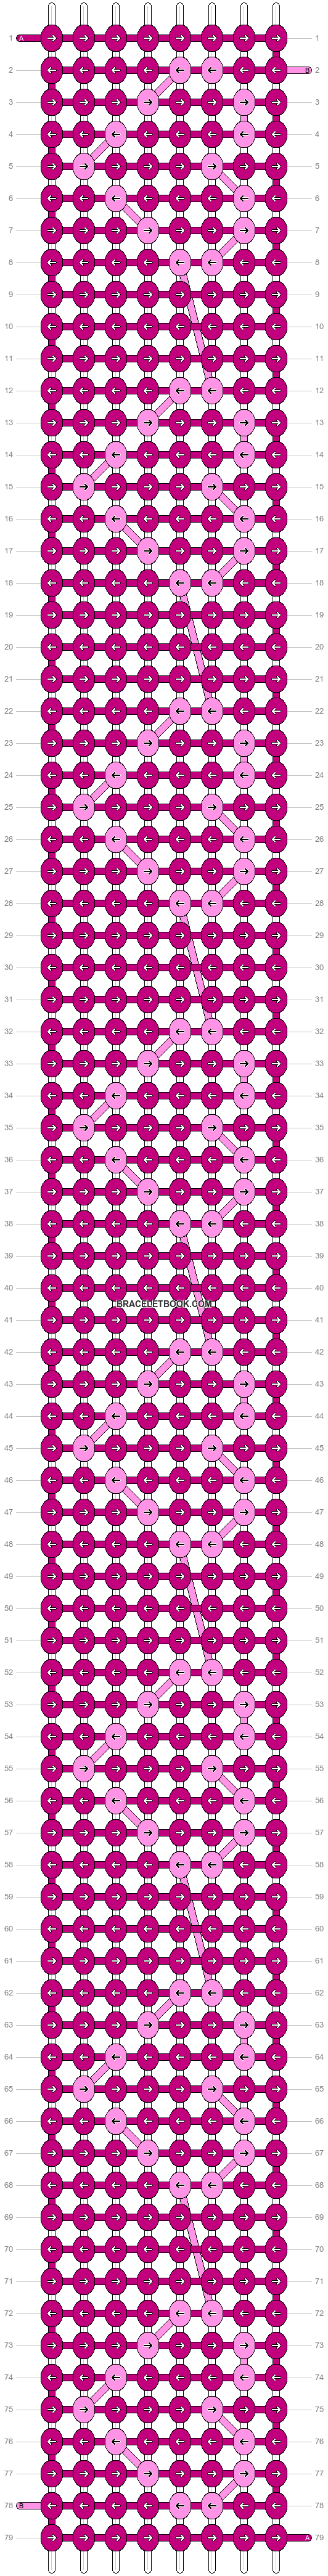 Alpha pattern #42247 variation #90435 pattern